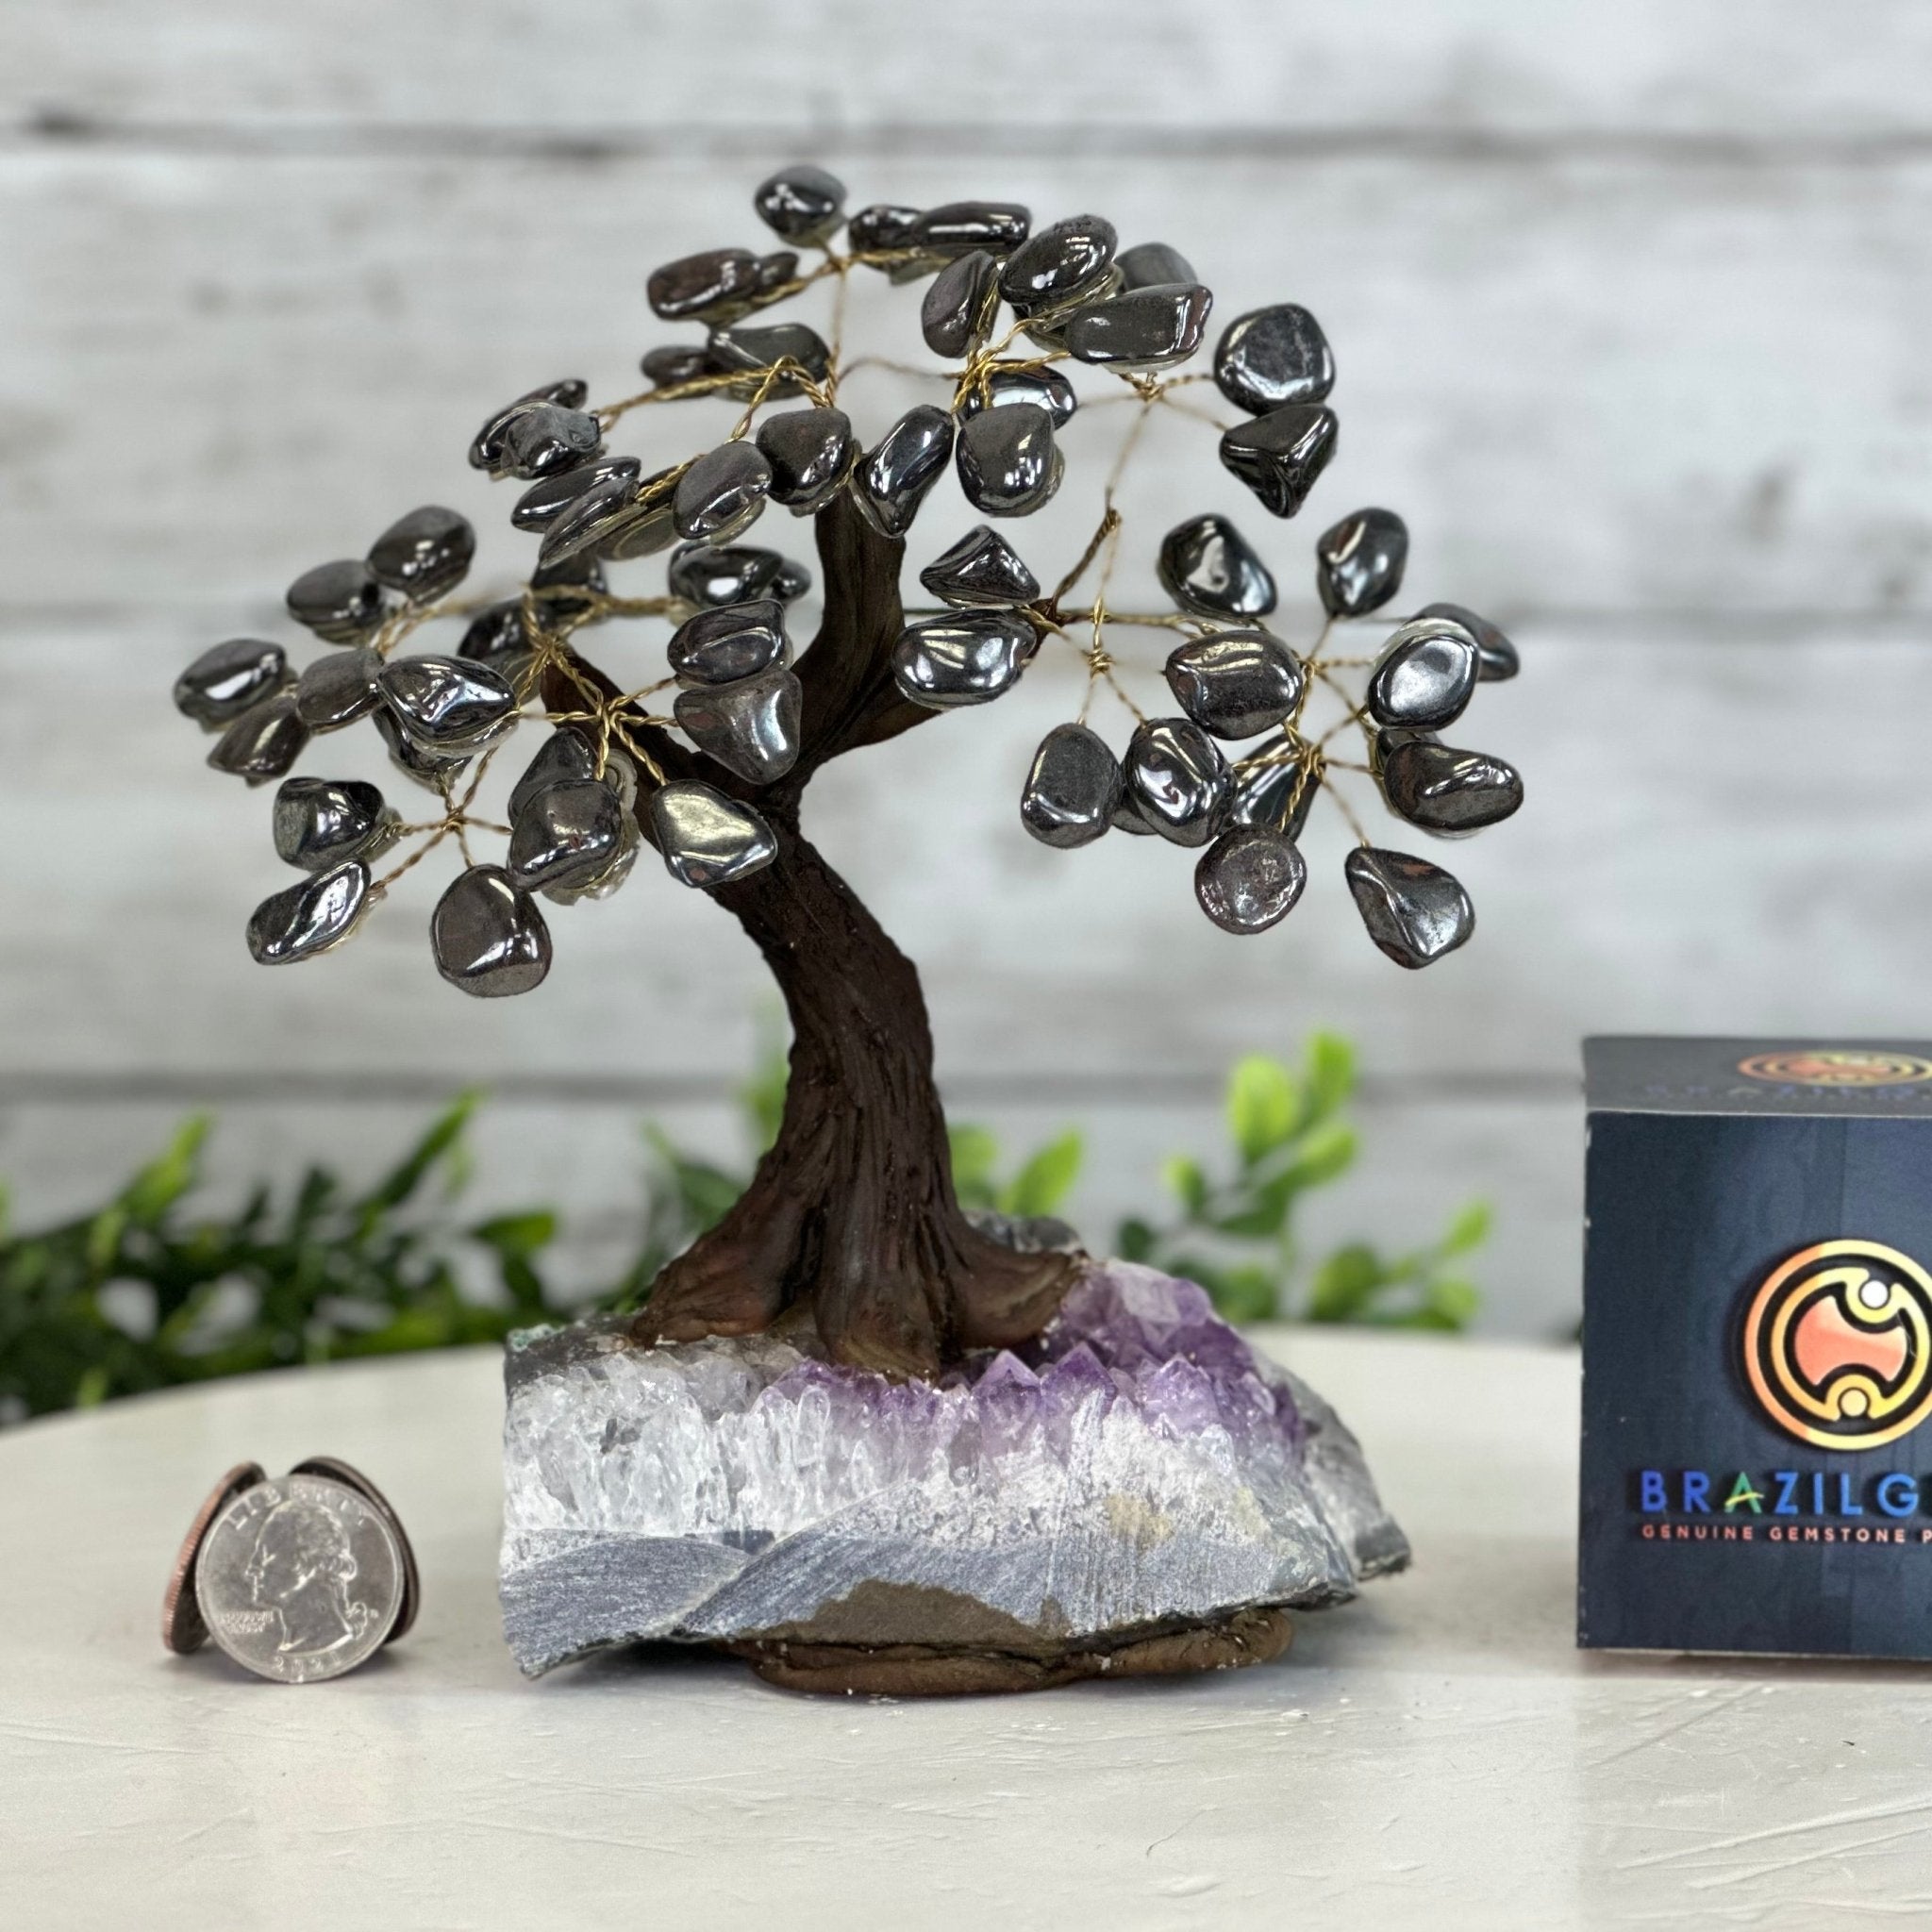 Hematite 7" Tall Handmade Gemstone Tree on a Crystal base, 60 Gems #5402HEMA - Brazil GemsBrazil GemsHematite 7" Tall Handmade Gemstone Tree on a Crystal base, 60 Gems #5402HEMAGemstone Trees5402HEMA